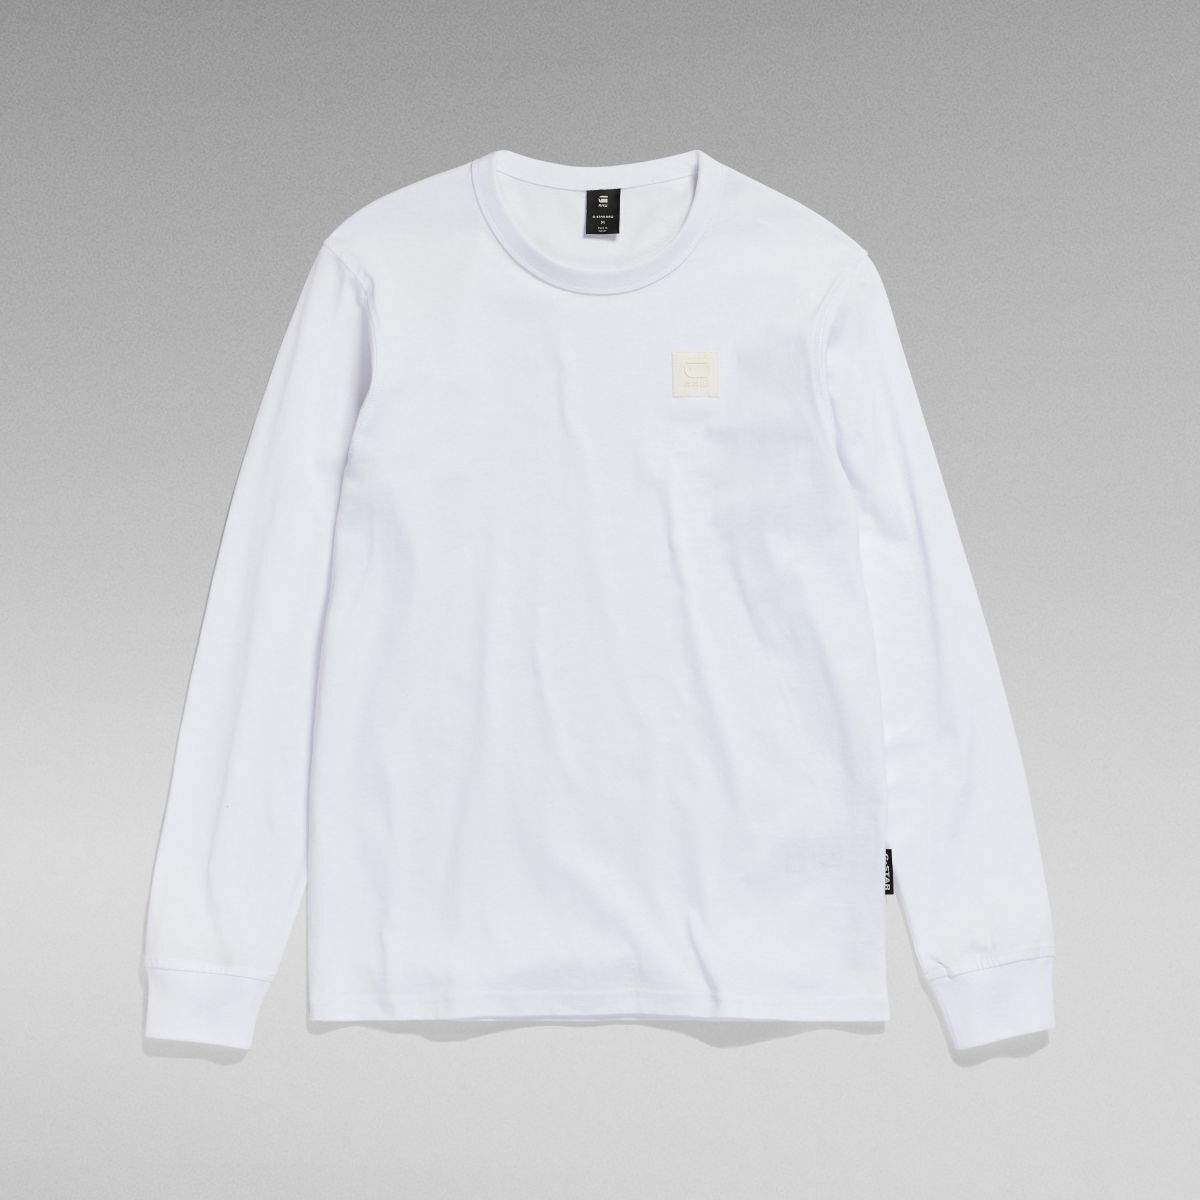 Vêtements Homme palm tree embroidery bomber jacket item F23455-C336 PREMIUM BASE-110 WHITE Blanc